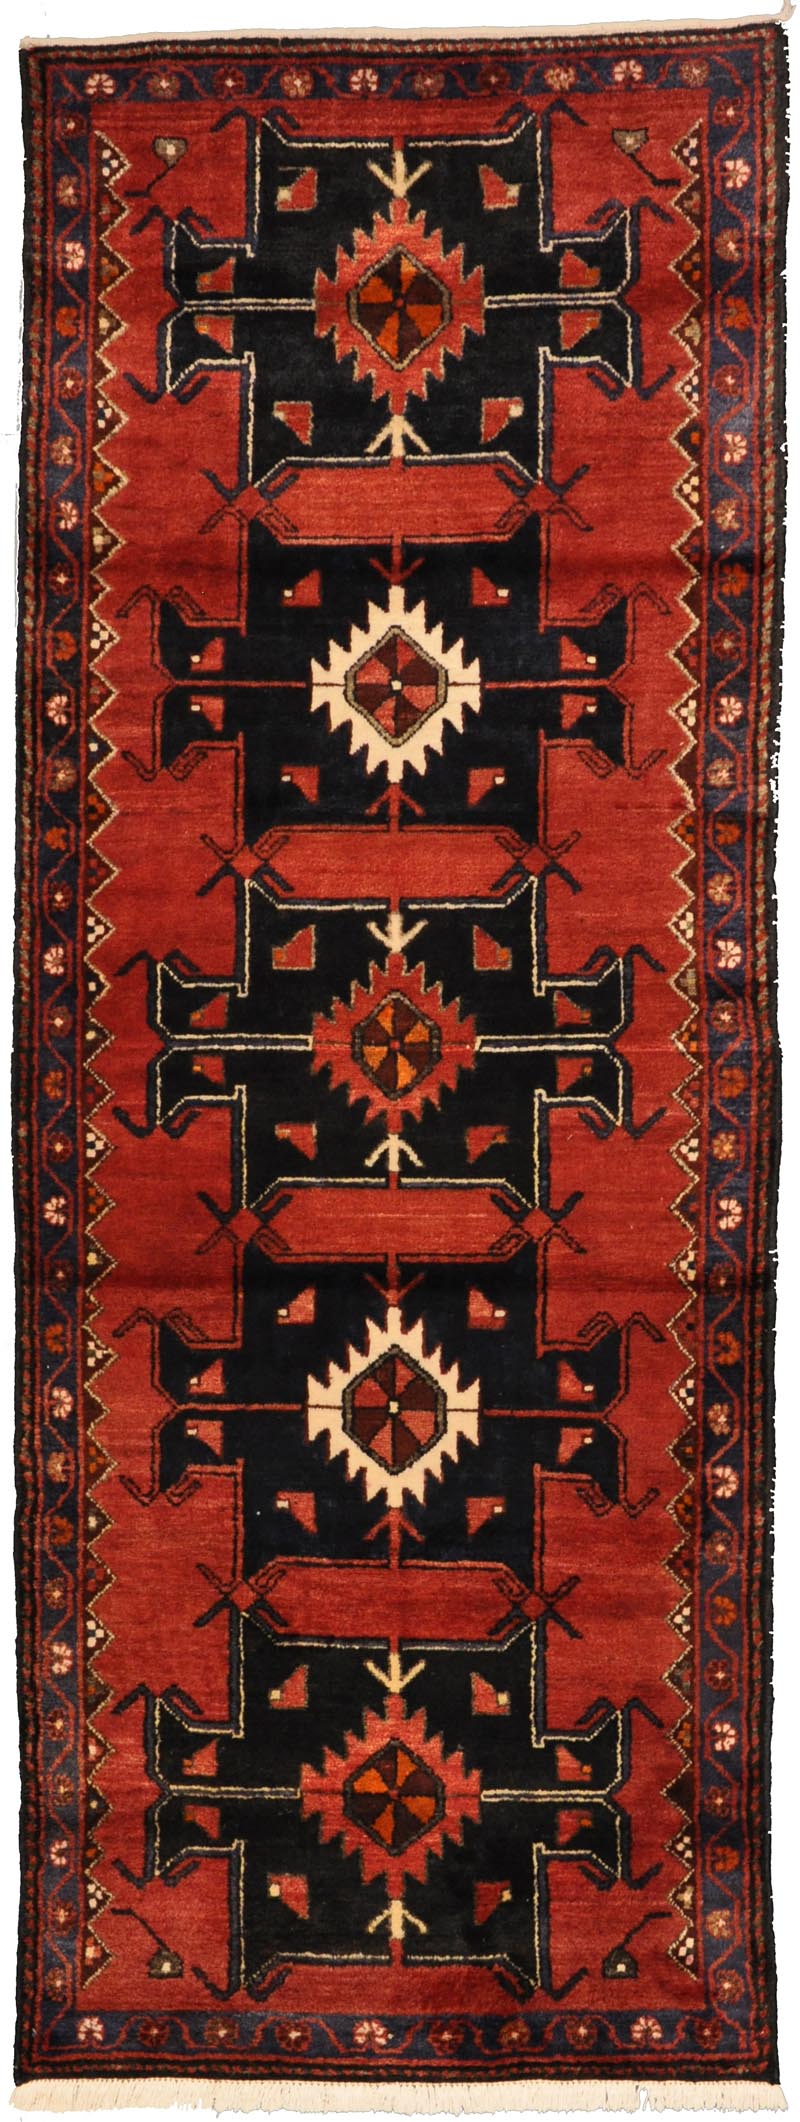 persian hamadan tribal runner rug online rug store vintage antique handmade carpet runner online rug store refined carpet rugs orange county rug store fountain valley california